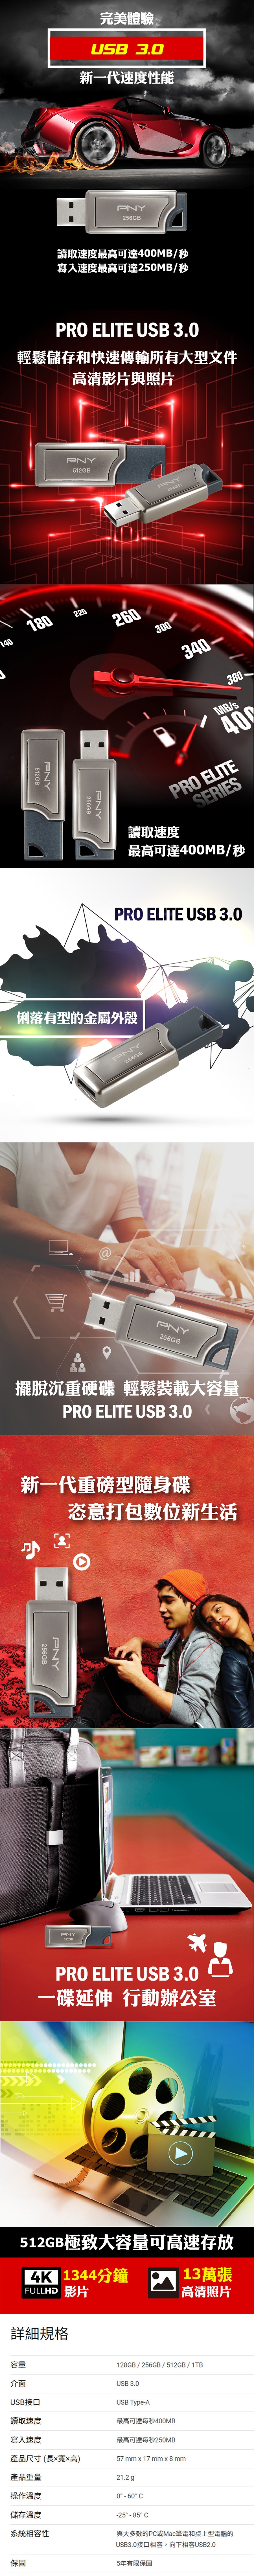 PNY USB3.0 256GB Pro Elite 極速伸縮碟